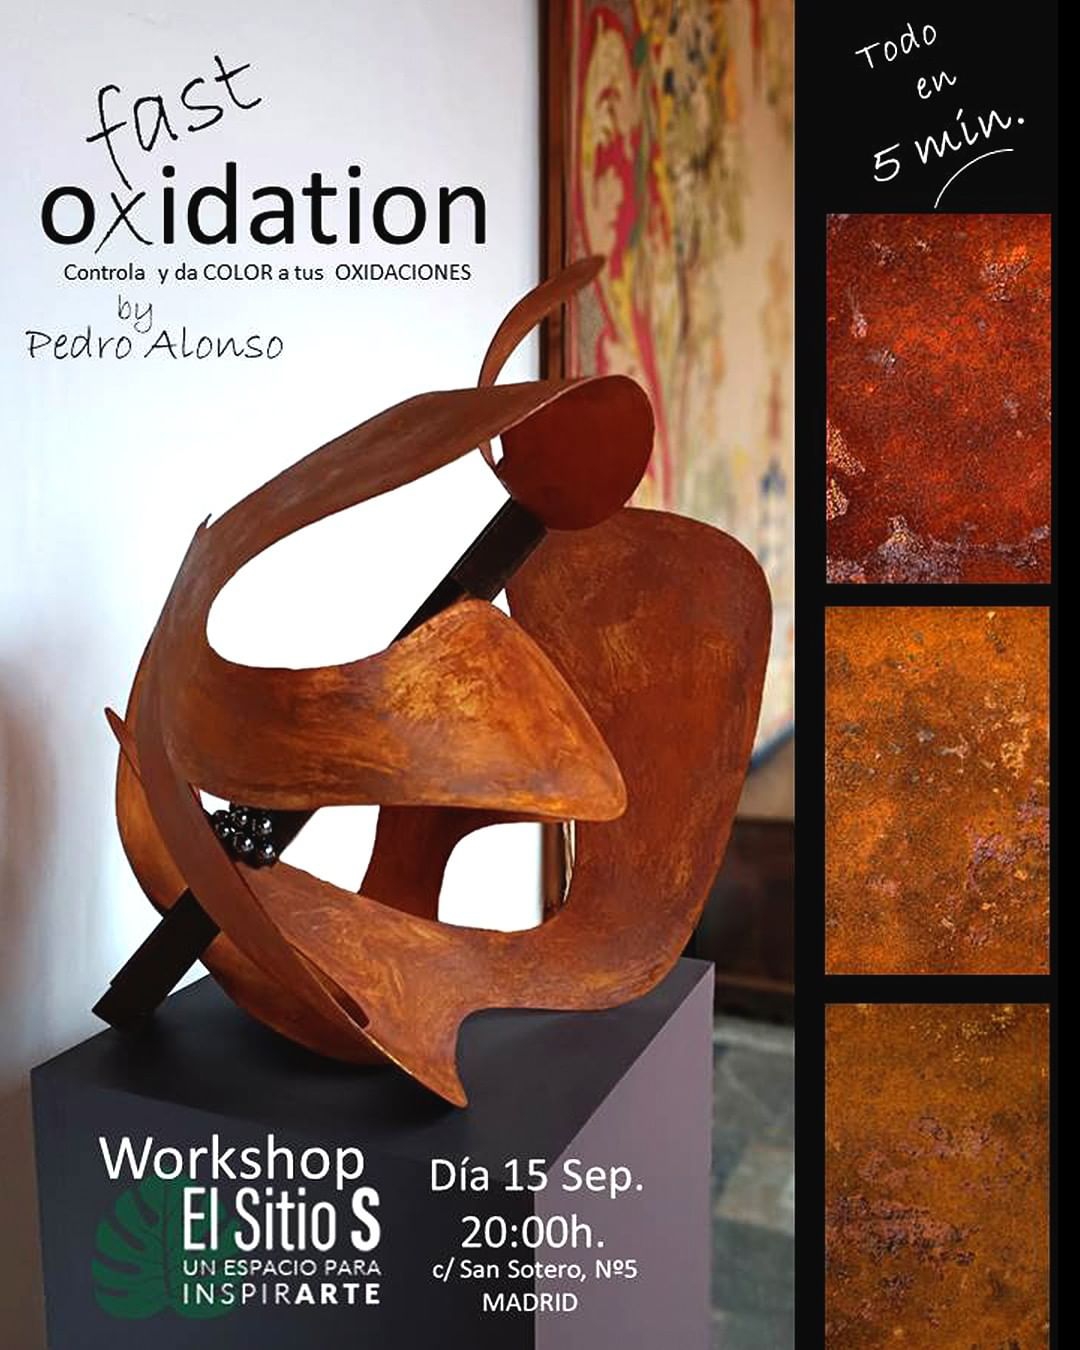 Workshop: Fast oxidation - el sitio s